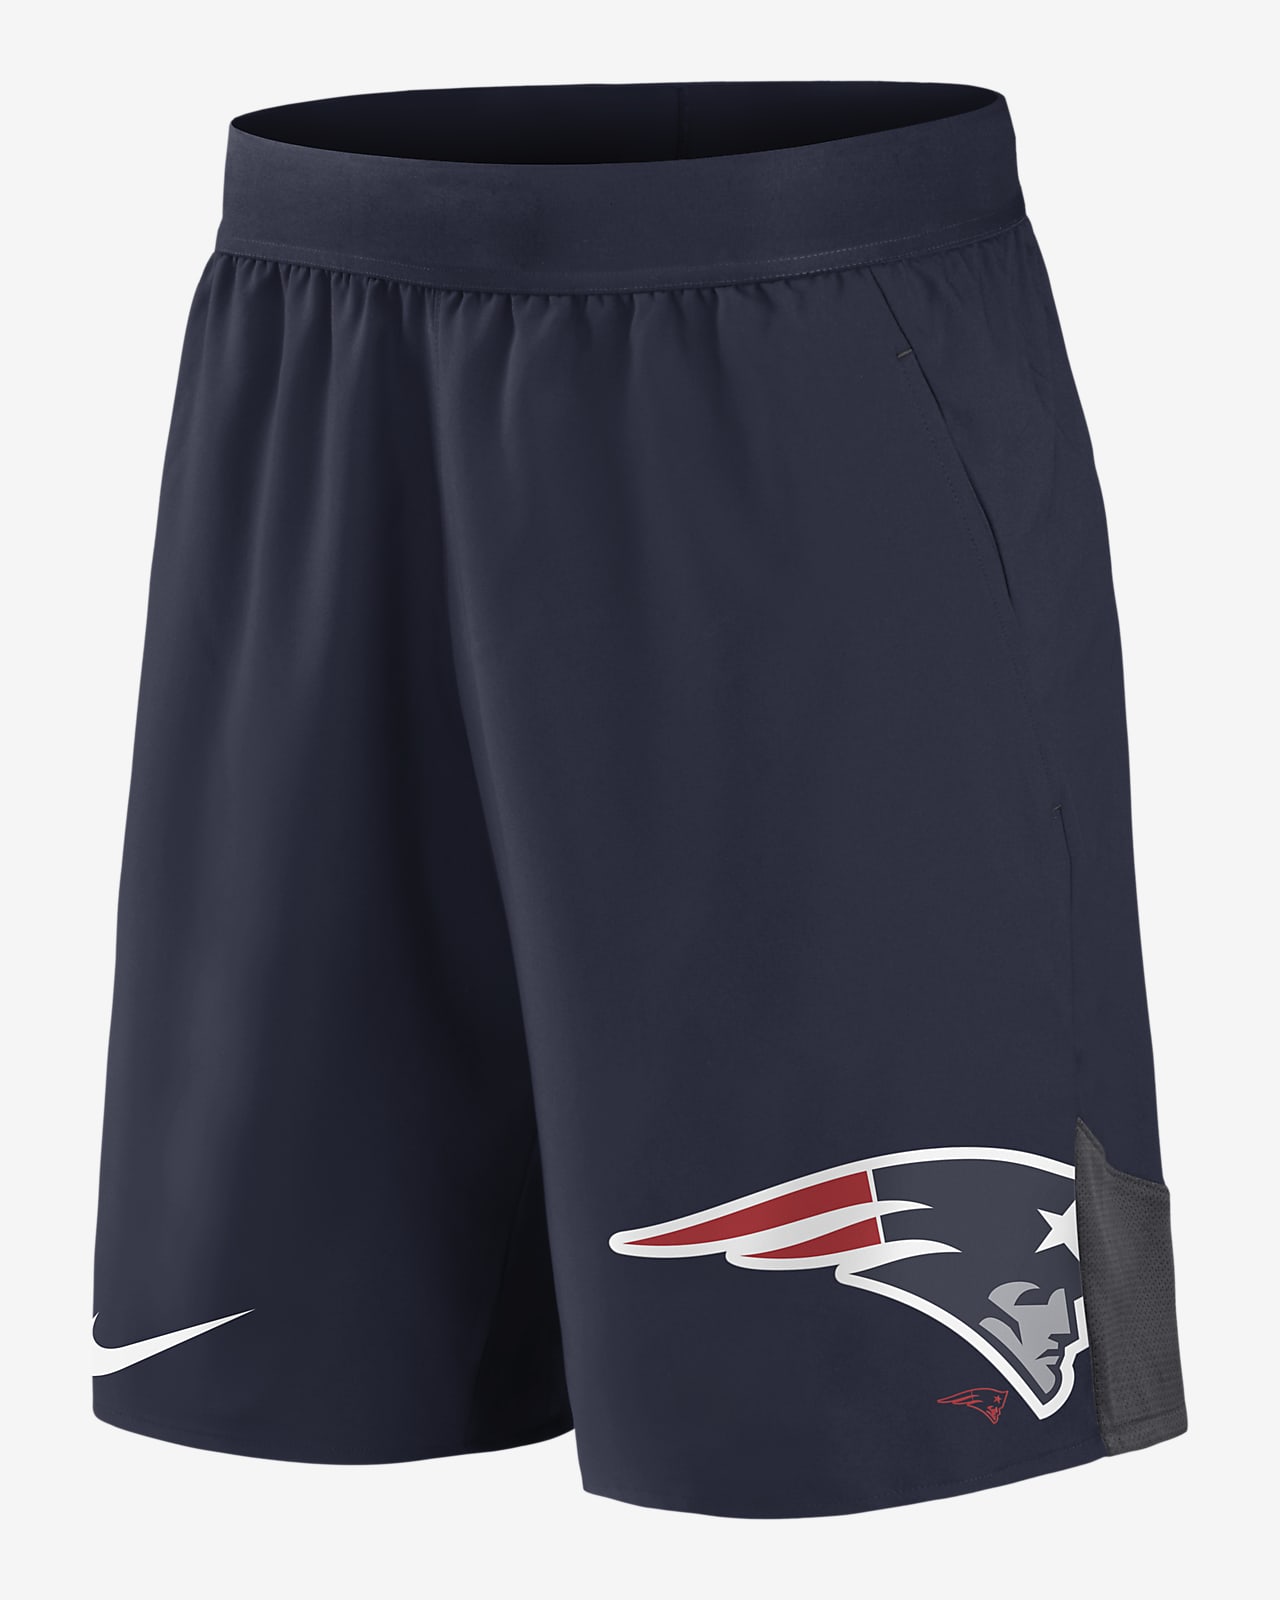 Nike Dri-FIT Stretch (NFL New England Patriots) Men's Shorts